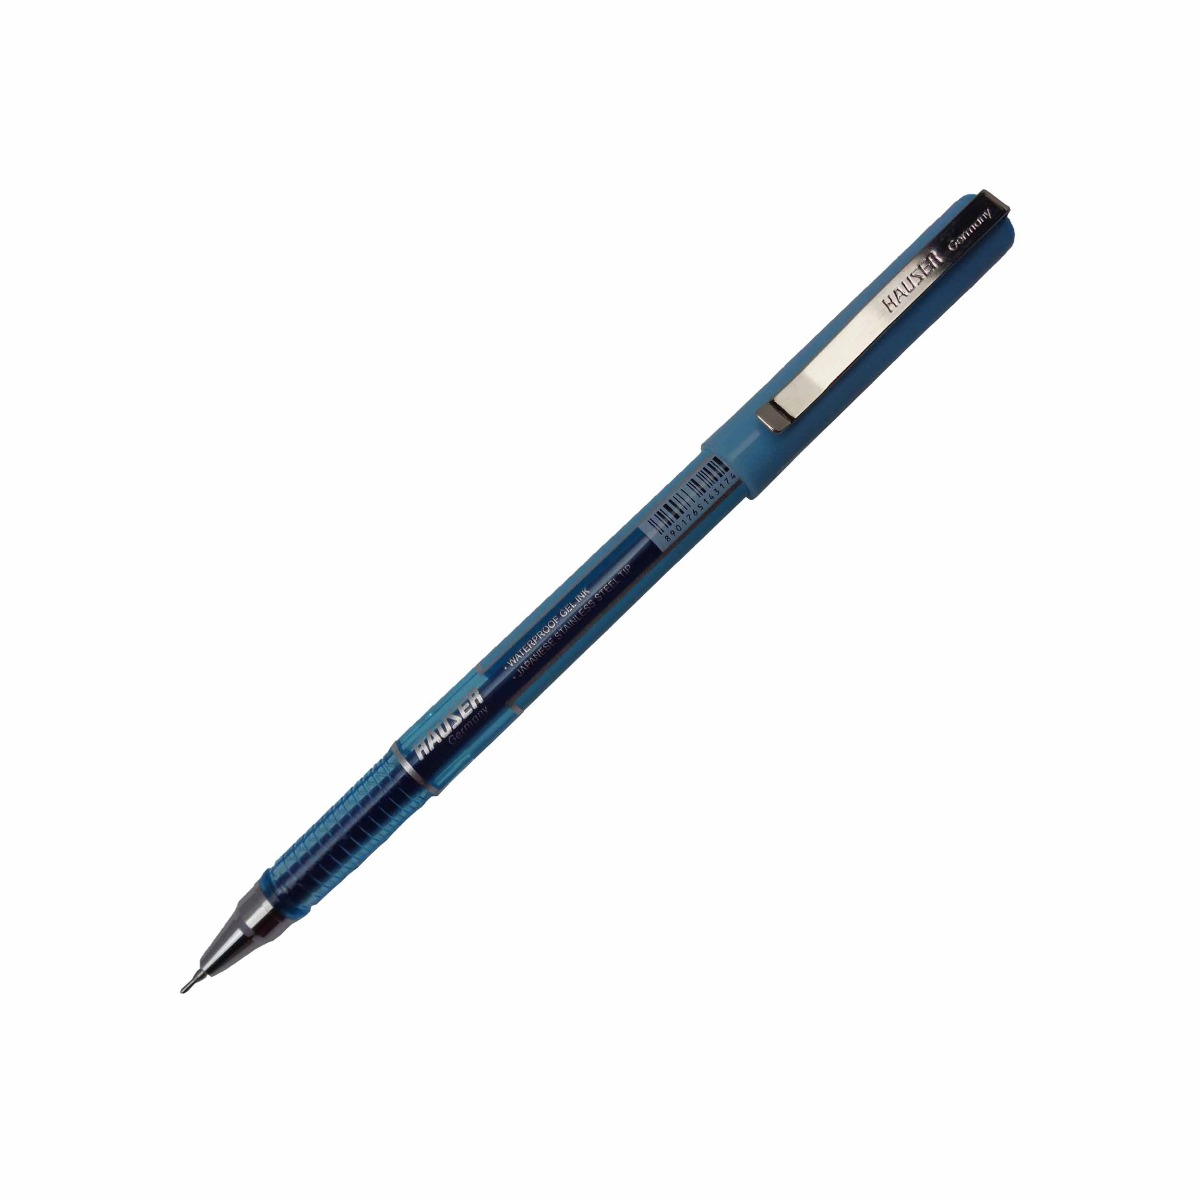 Hauser Model: 15284 Sonic Sky blue color body with silver clip blue ink cap type fine tip gel pen